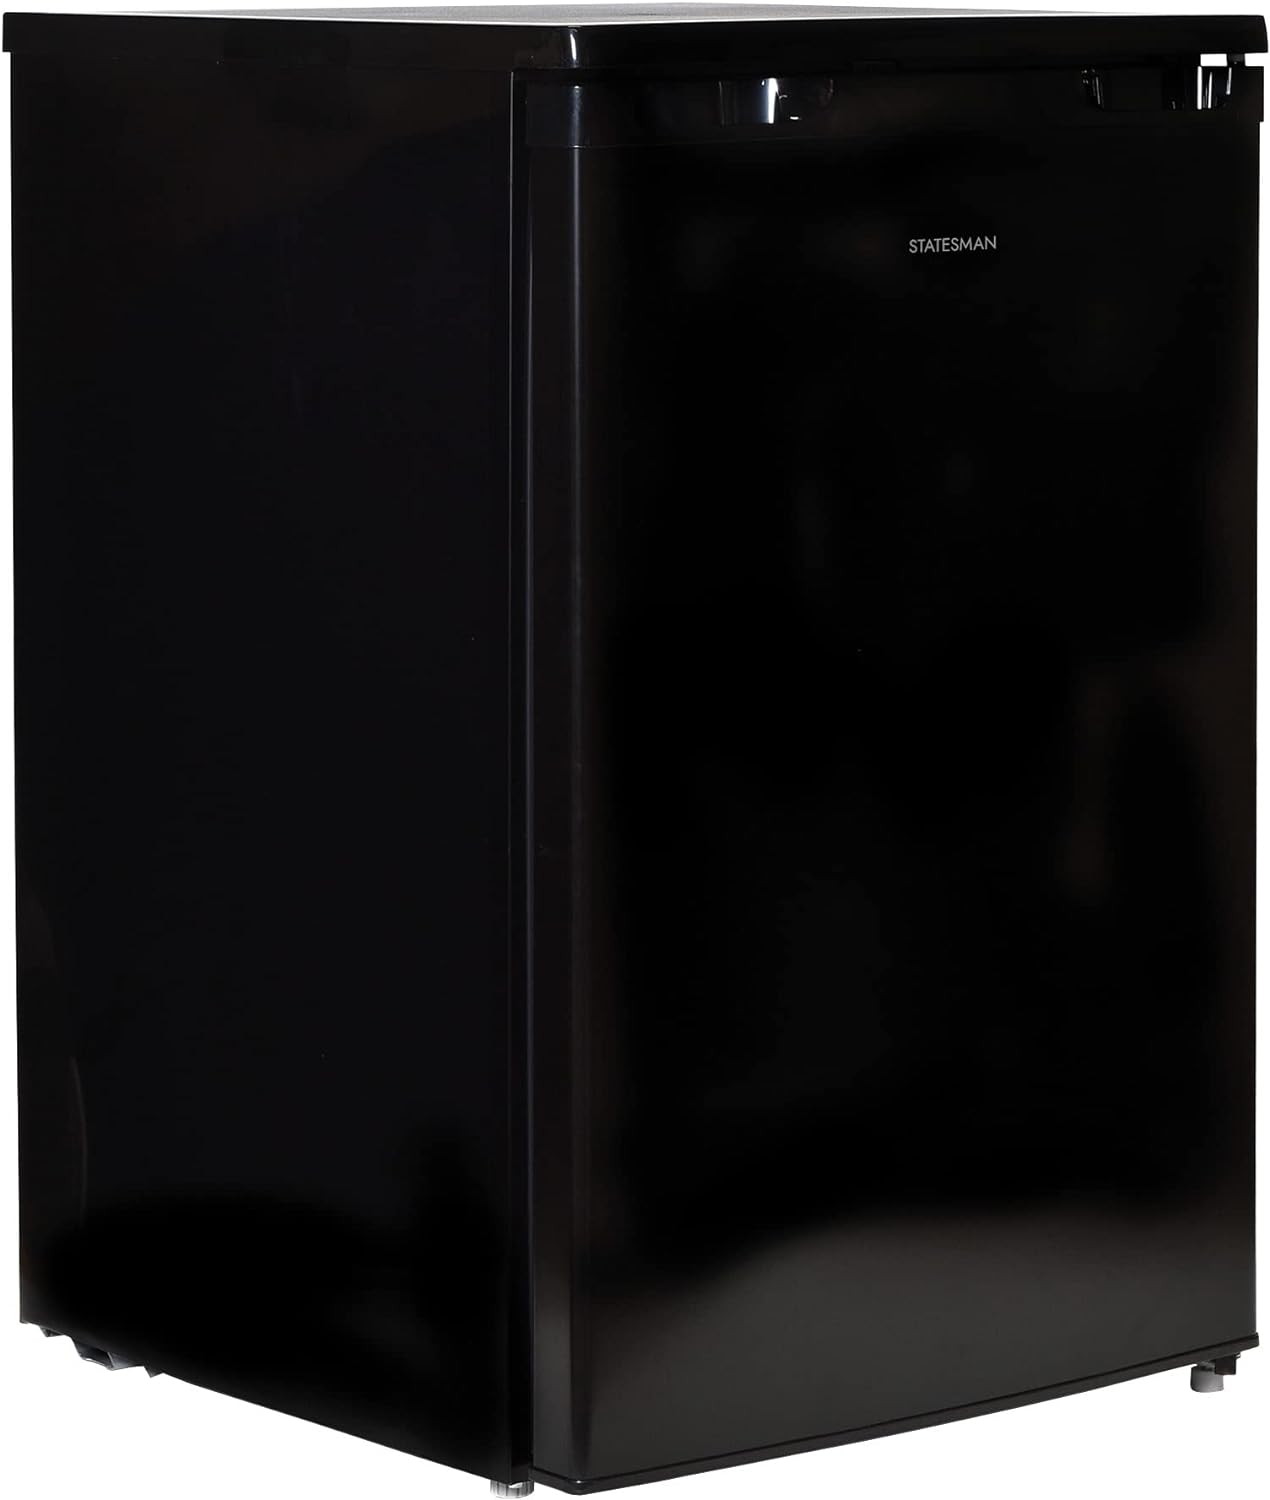 Statesman U355B Under Counter Freezer, 55cm, 86 Litres, 3 Large Capacity Storage Drawers, 4* Freezer, Reversible door, Adjustable Feet, Energy efficient, Black - Amazing Gadgets Outlet